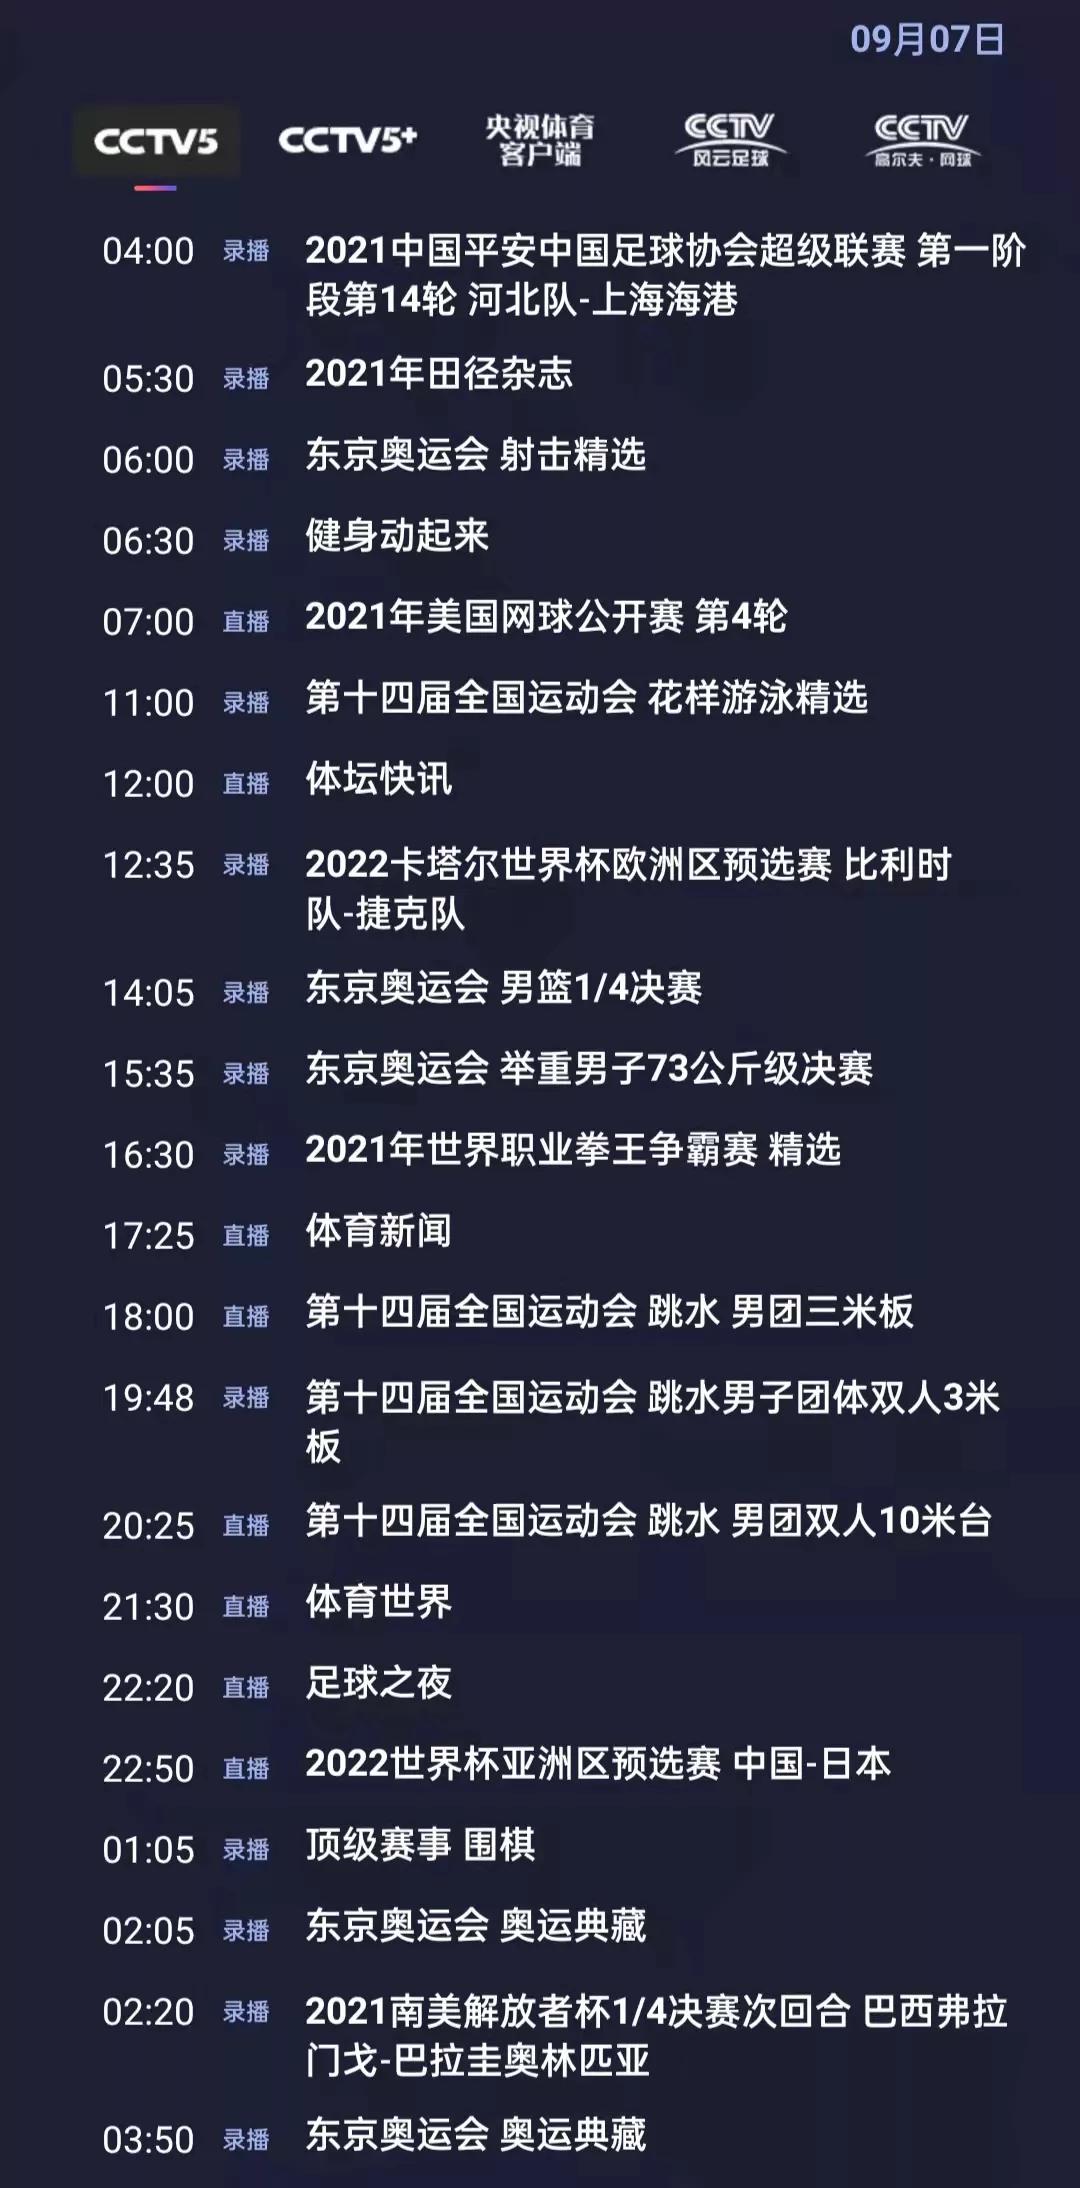 CCTV5今日节目单：22:50直播2022世界杯亚洲区预选赛(中国-日本)